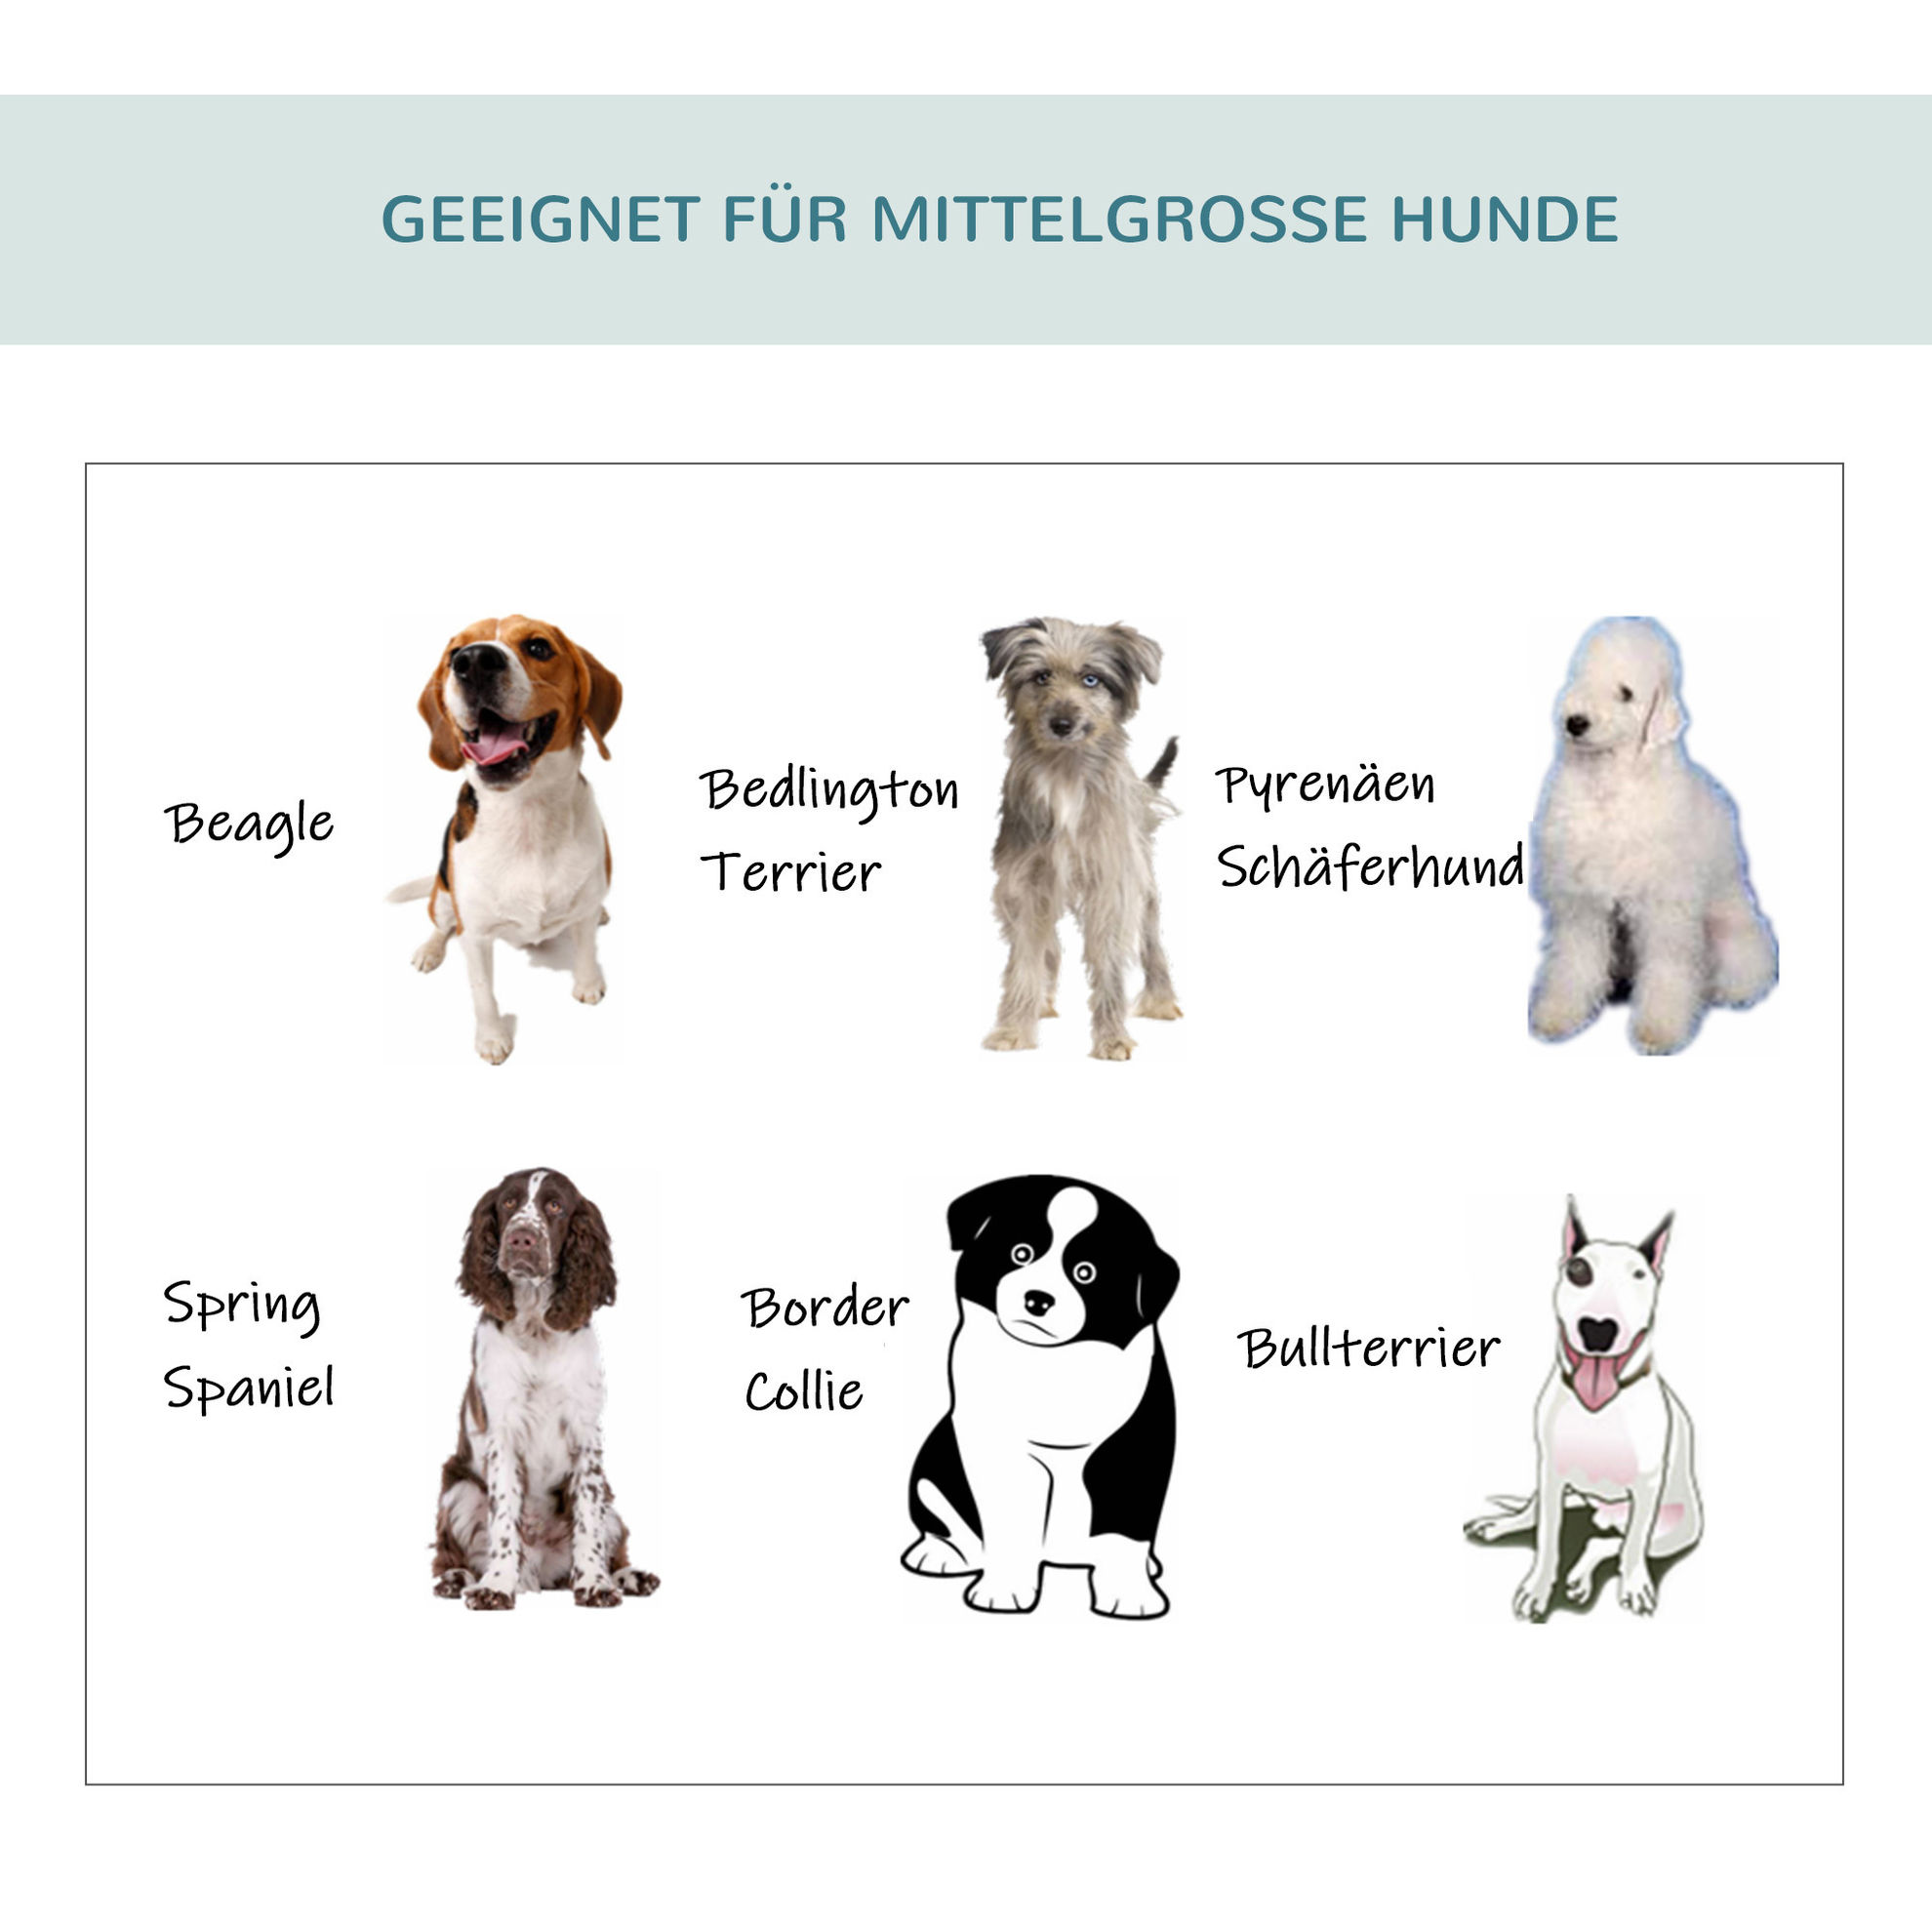 Hundetransportbox in Größe L Farbe: dunkelgrau, creme | Weltbild.de